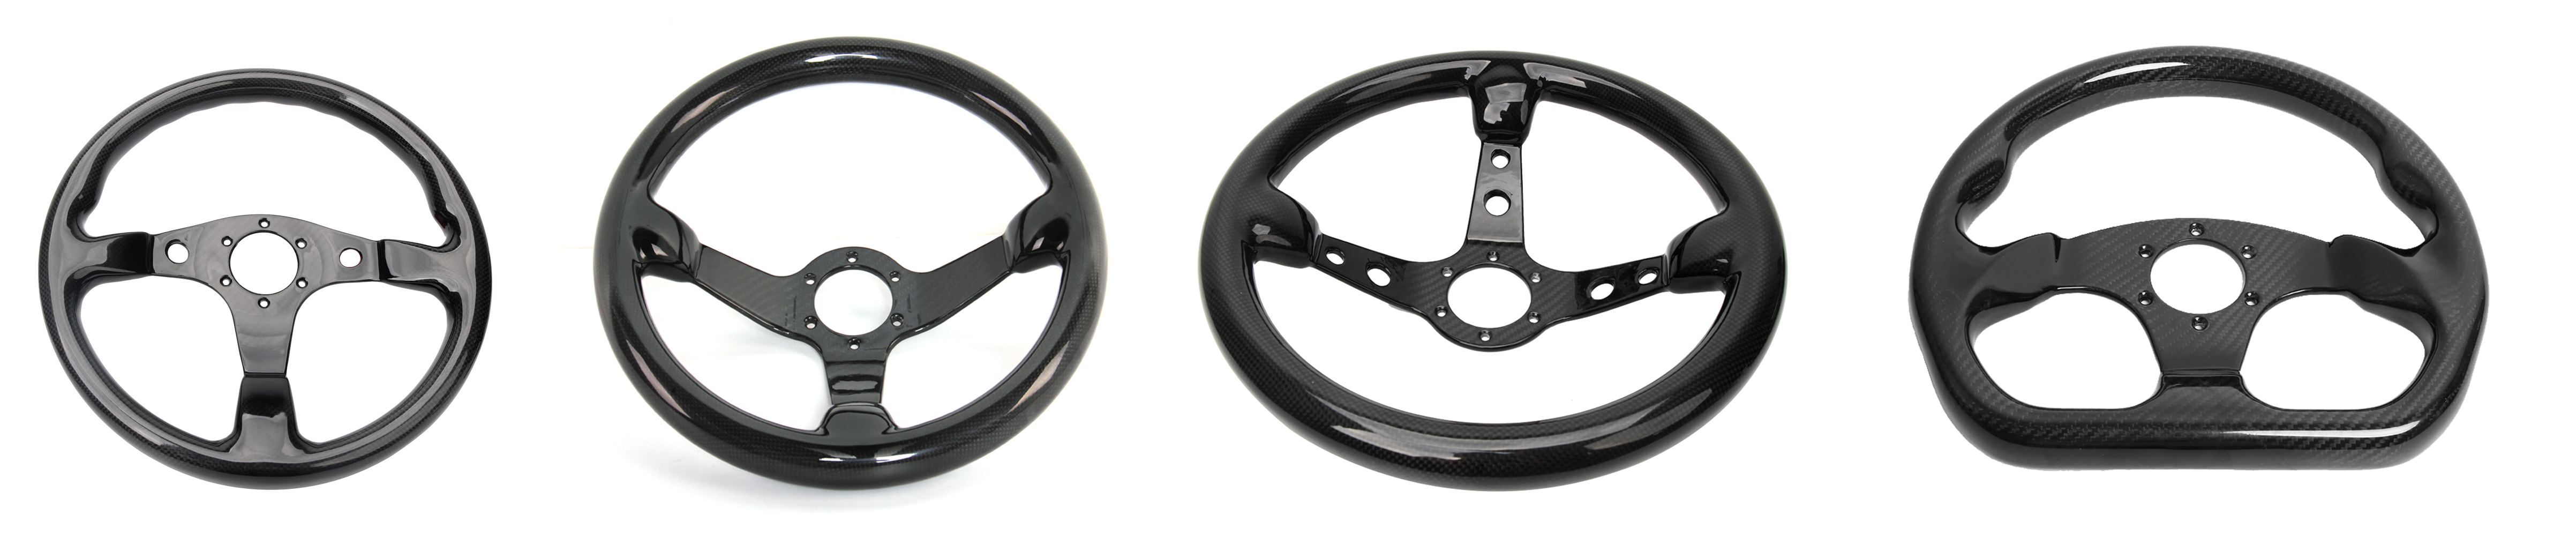 Hiwowsport Carbon Fiber Racing Steering Wheel 300mm Diameter Bolts 